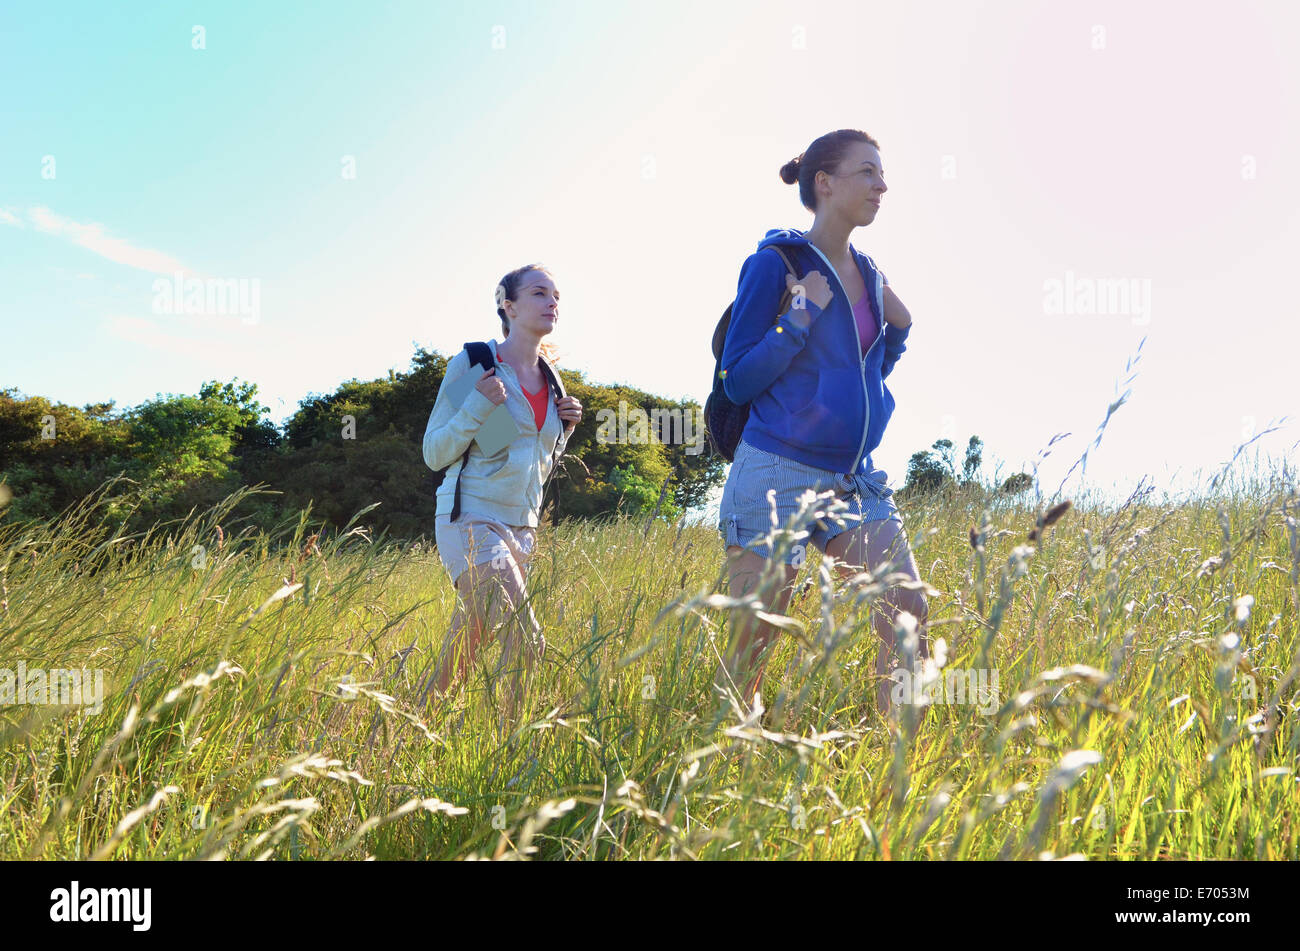 Two young women hiking through field Stock Photo